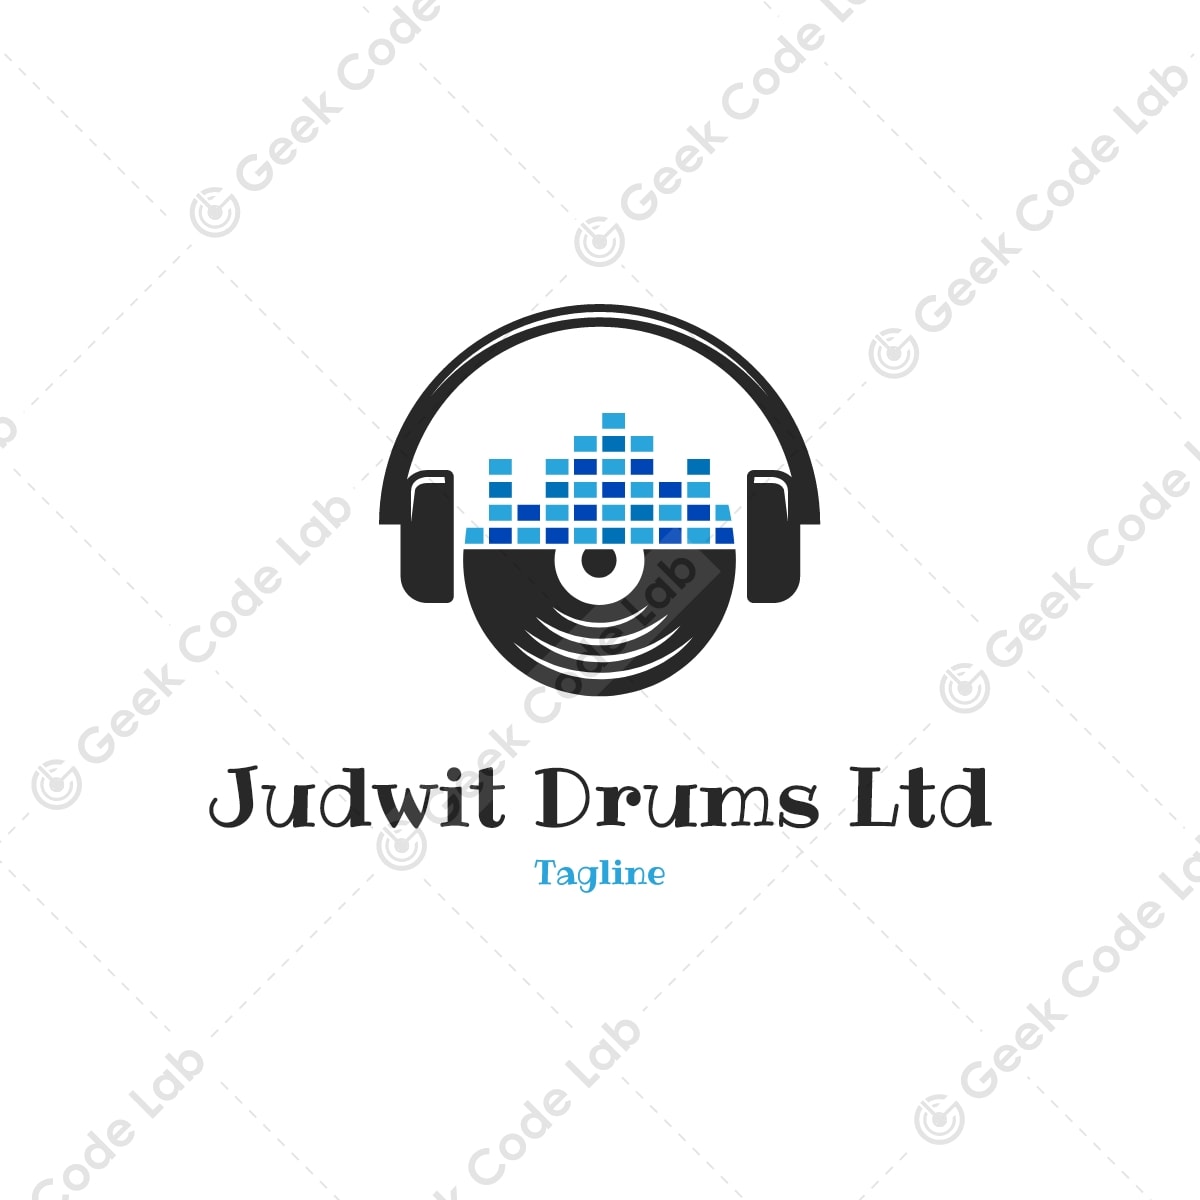 Judwit Drums Ltd